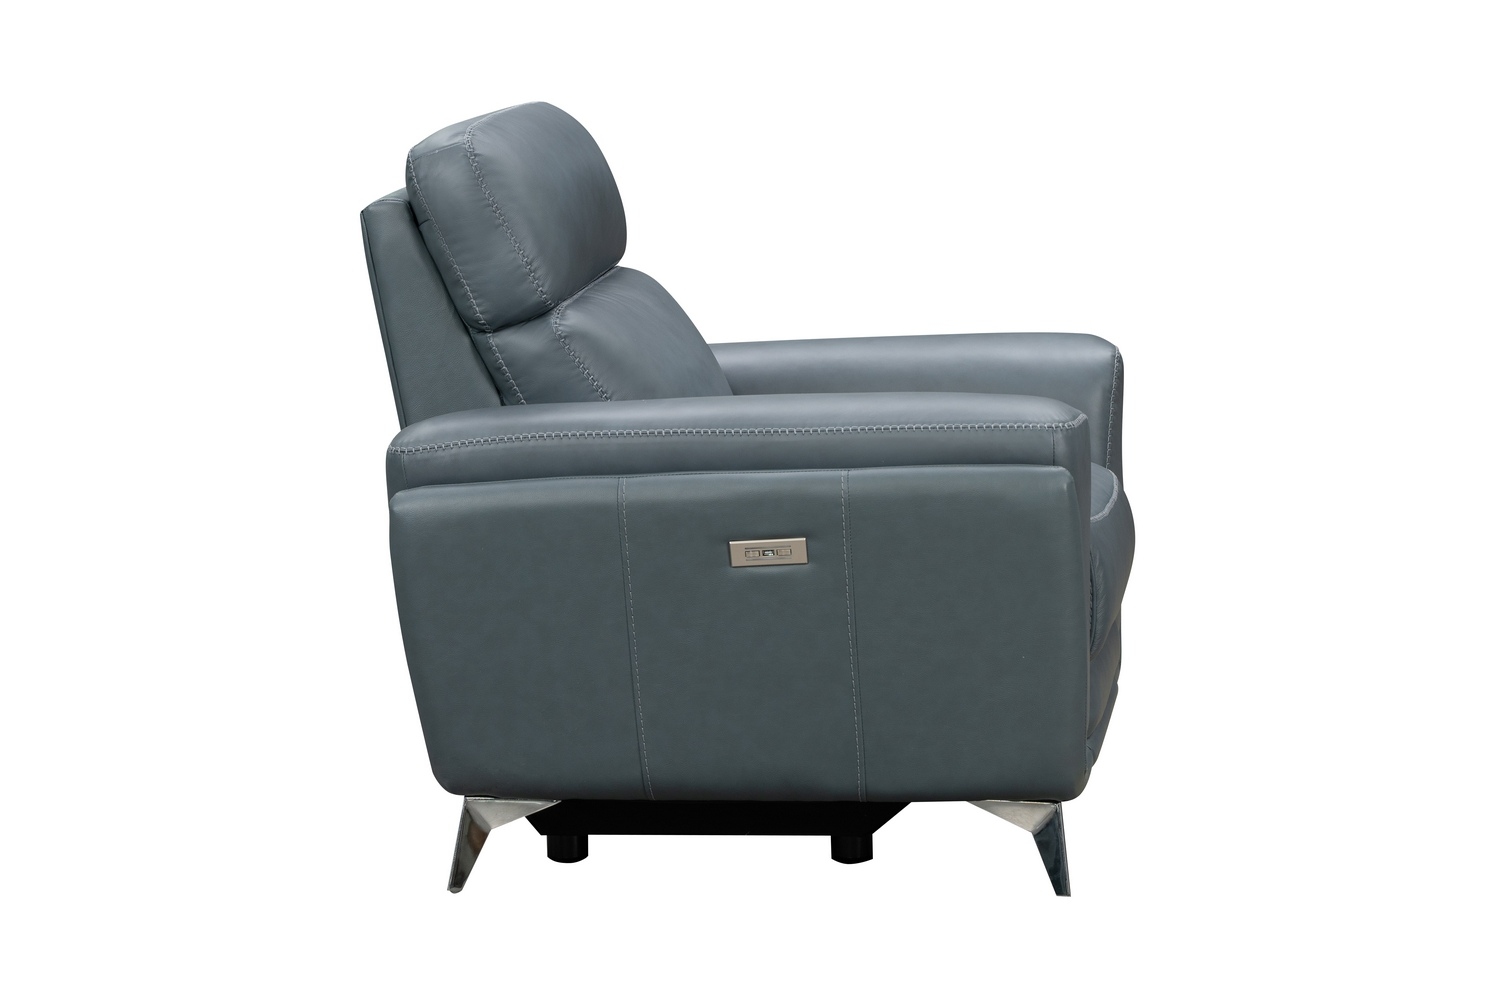 Barcalounger Cameron Power Recliner Chair with Power Head Rest - Masen Bluegray/Leather Match